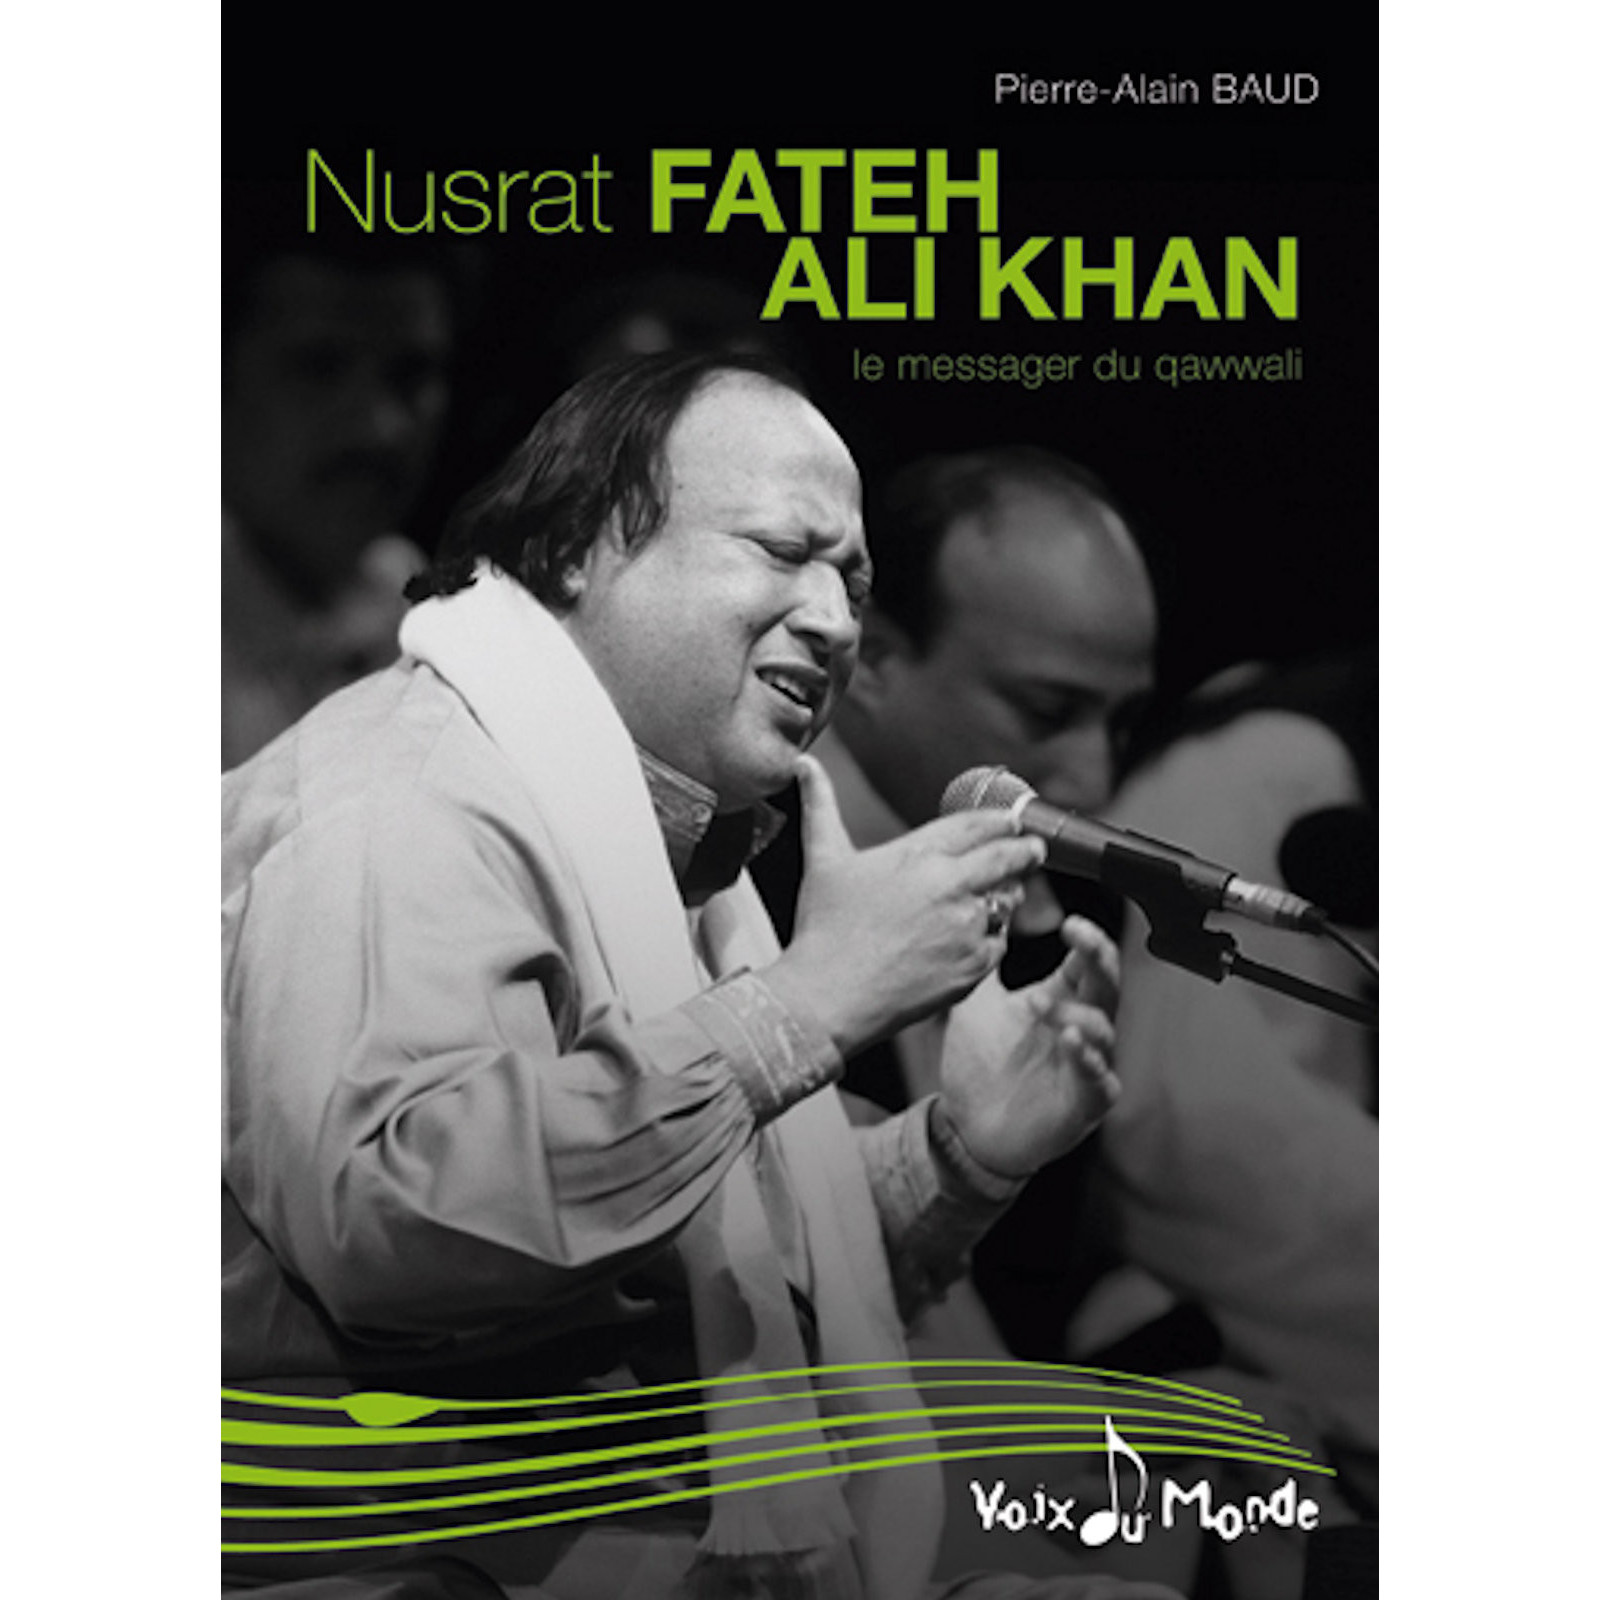 Nusrat FATEH ALI KHAN, le messager du qawwali